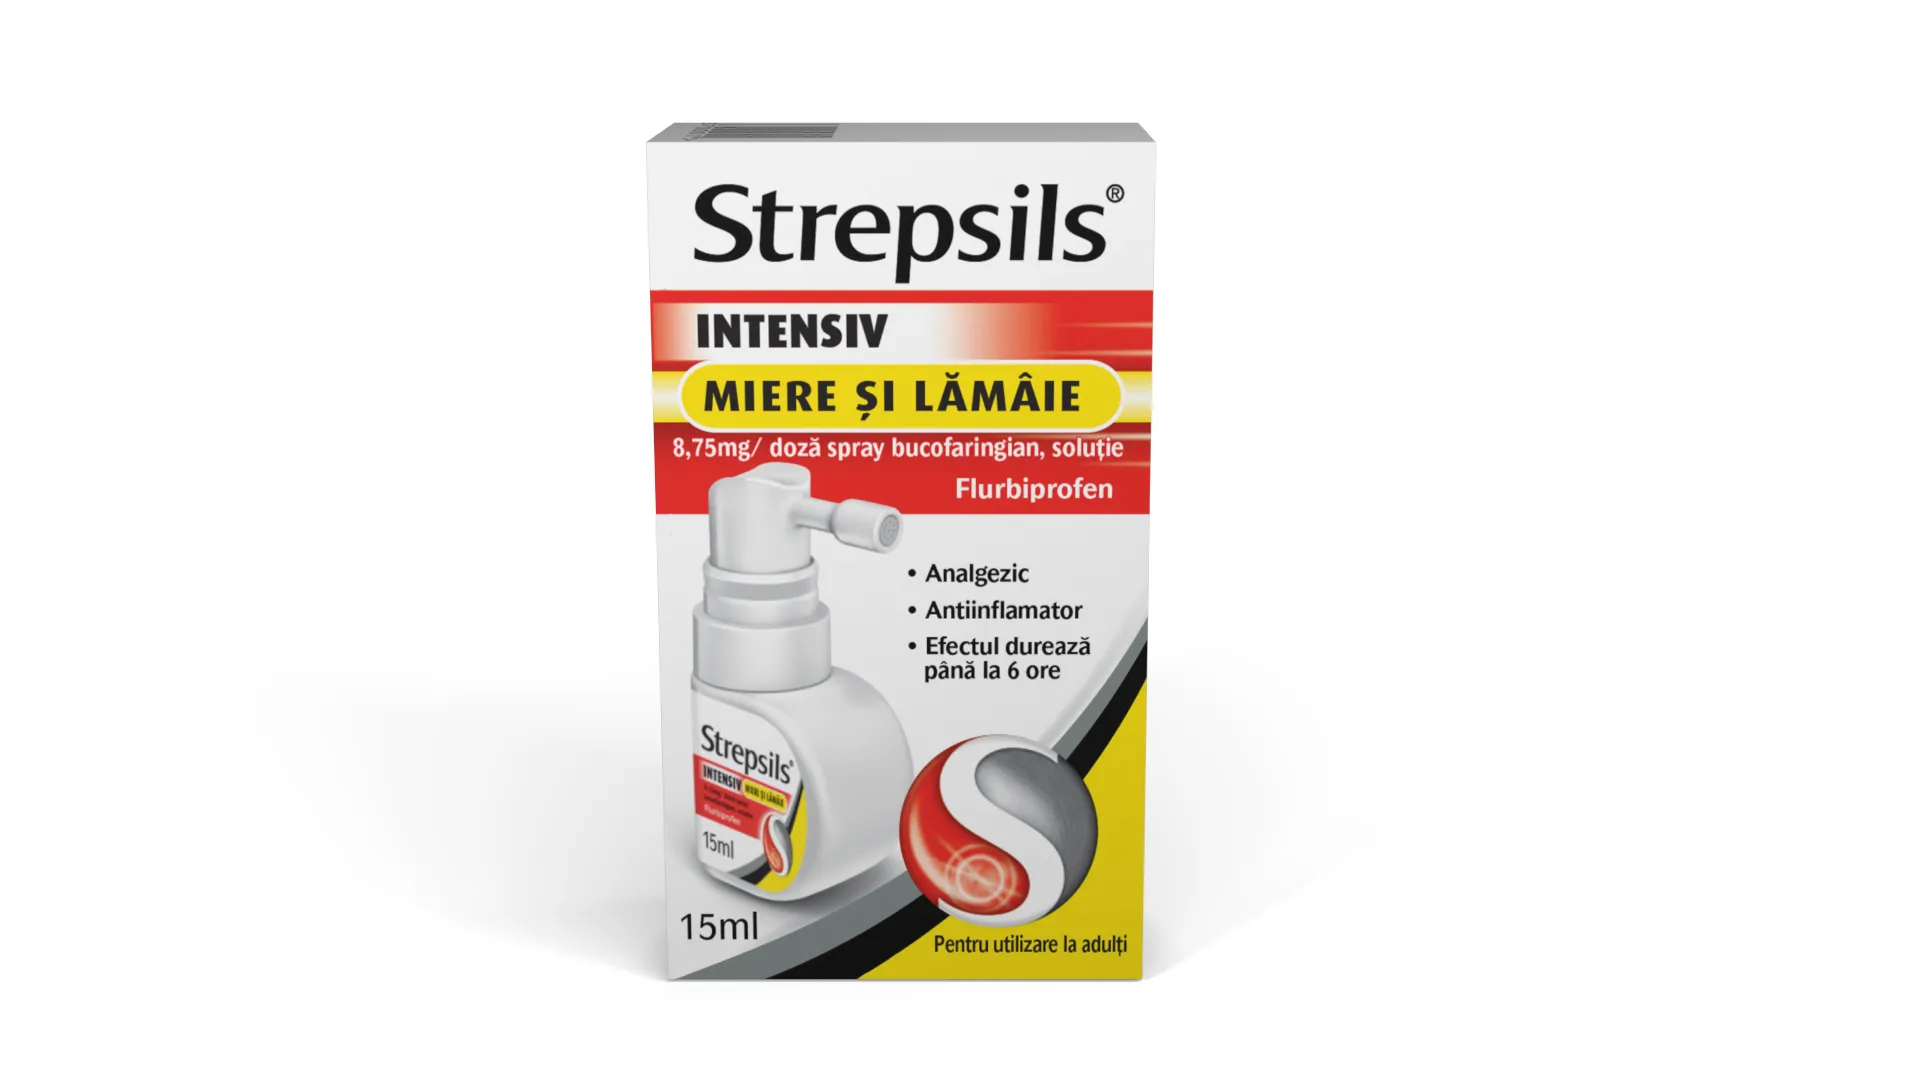 Strepsils Intensiv spray bucofaringian cu aroma de miere si lamaie, 15ml, Reckitt Benckiser